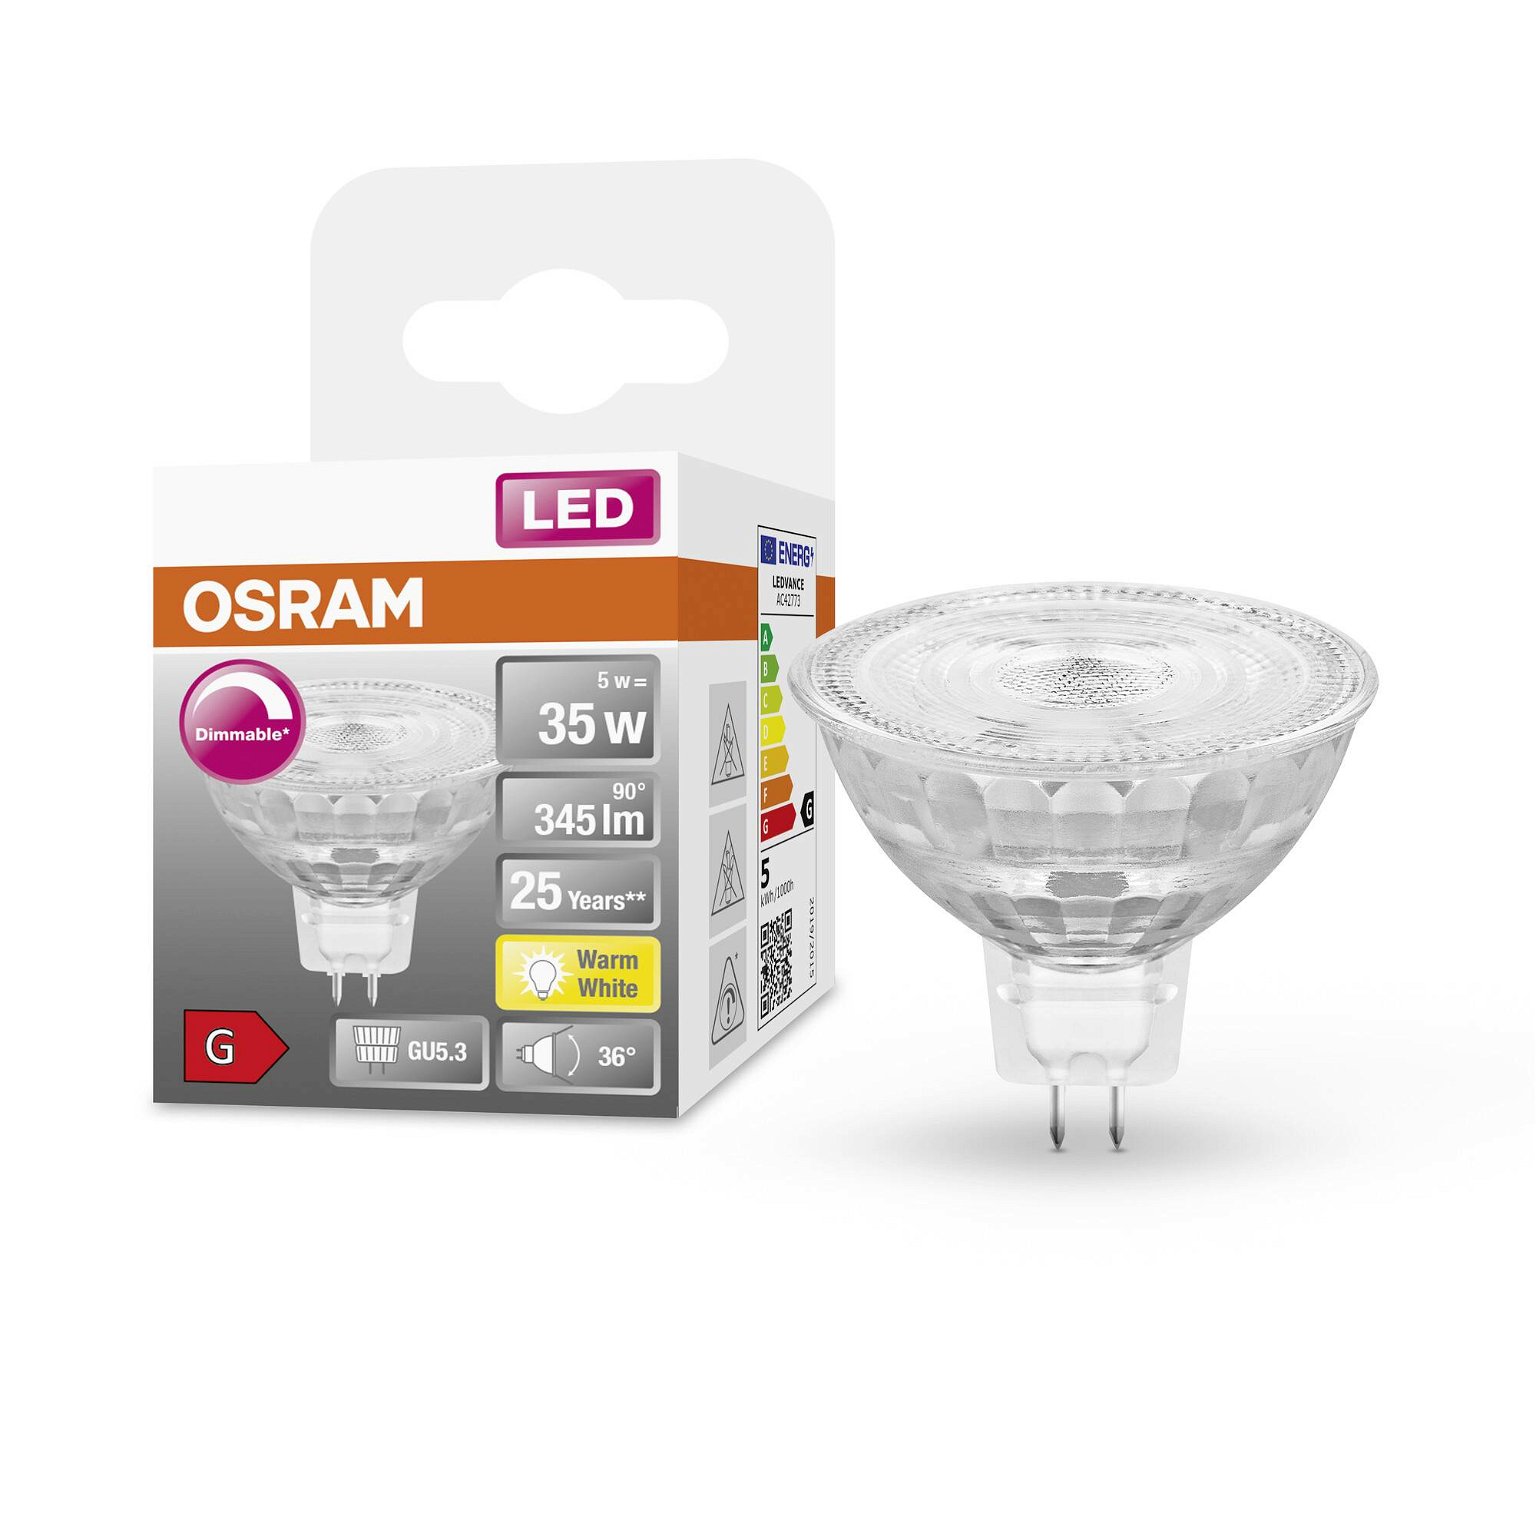 LED lemputė OSRAM SuperStar MR16, GU5.3, 5W, 2700 K, 36°, 345 lm, dimeriuojama, šiltai baltos sp. - 2